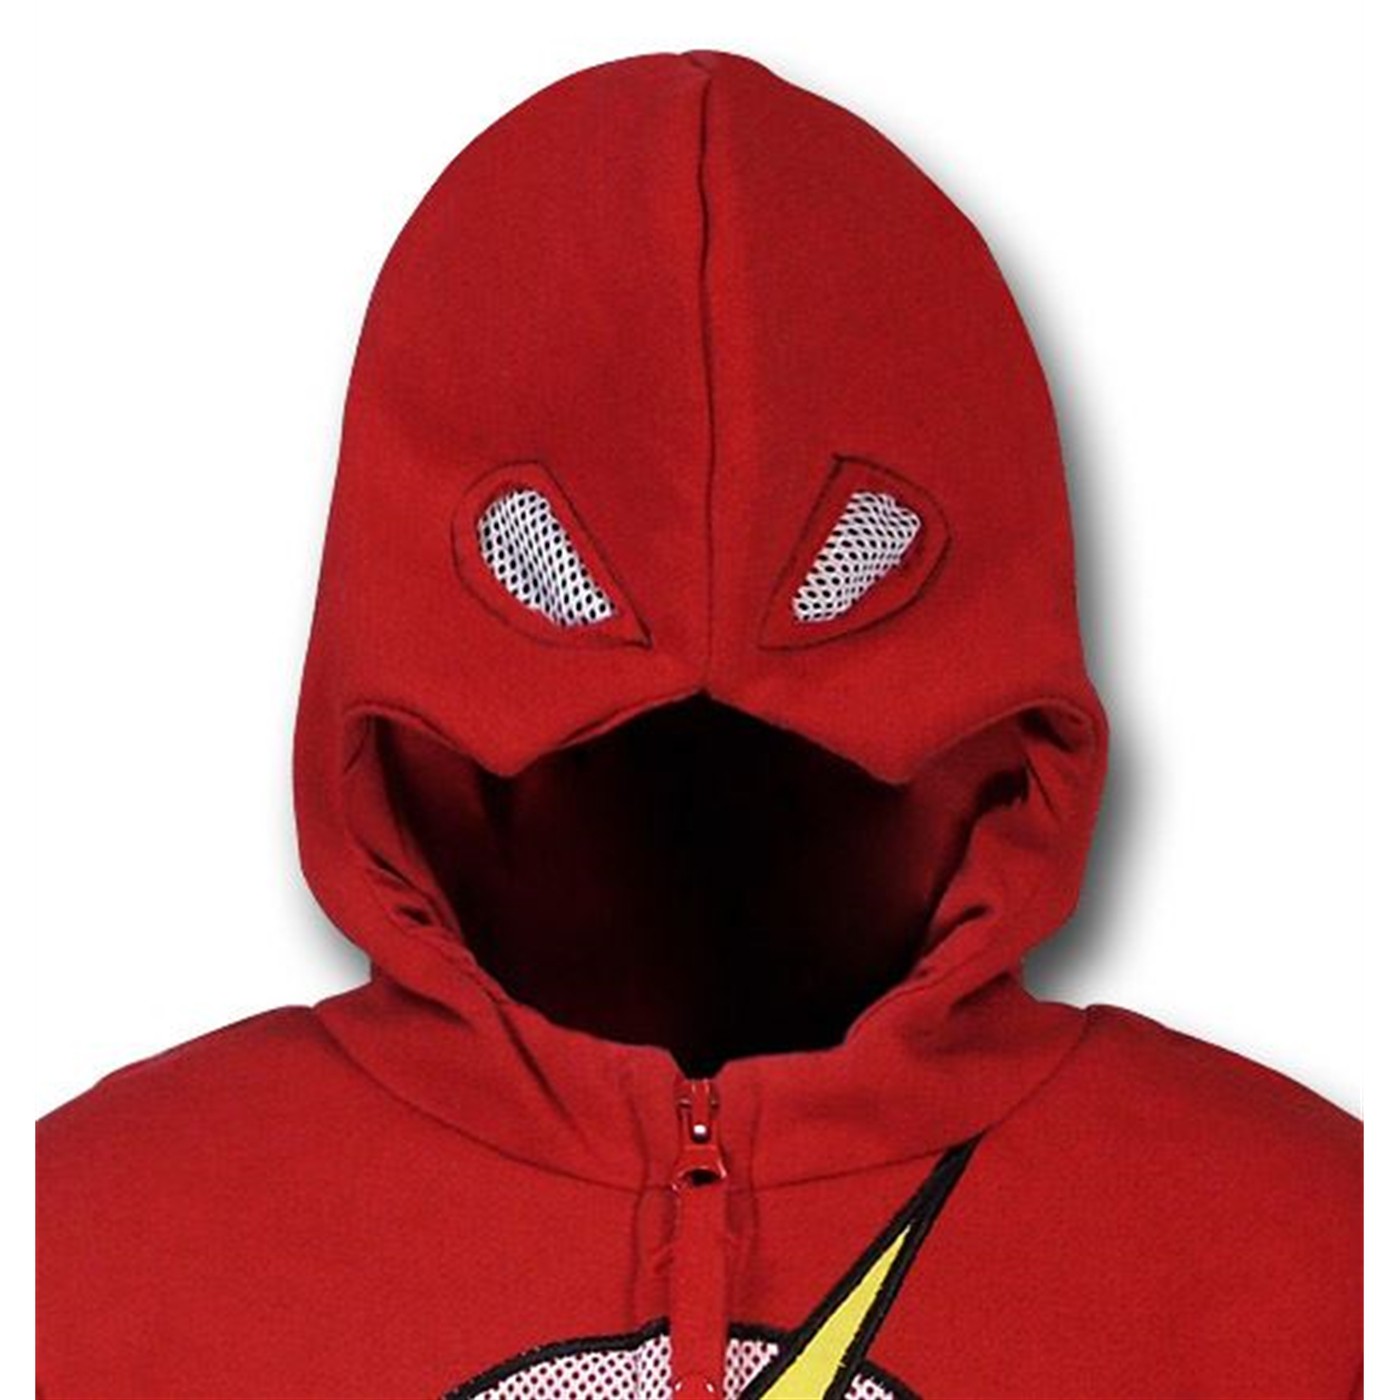 Flash Kids Costume Hoodie w/Mask